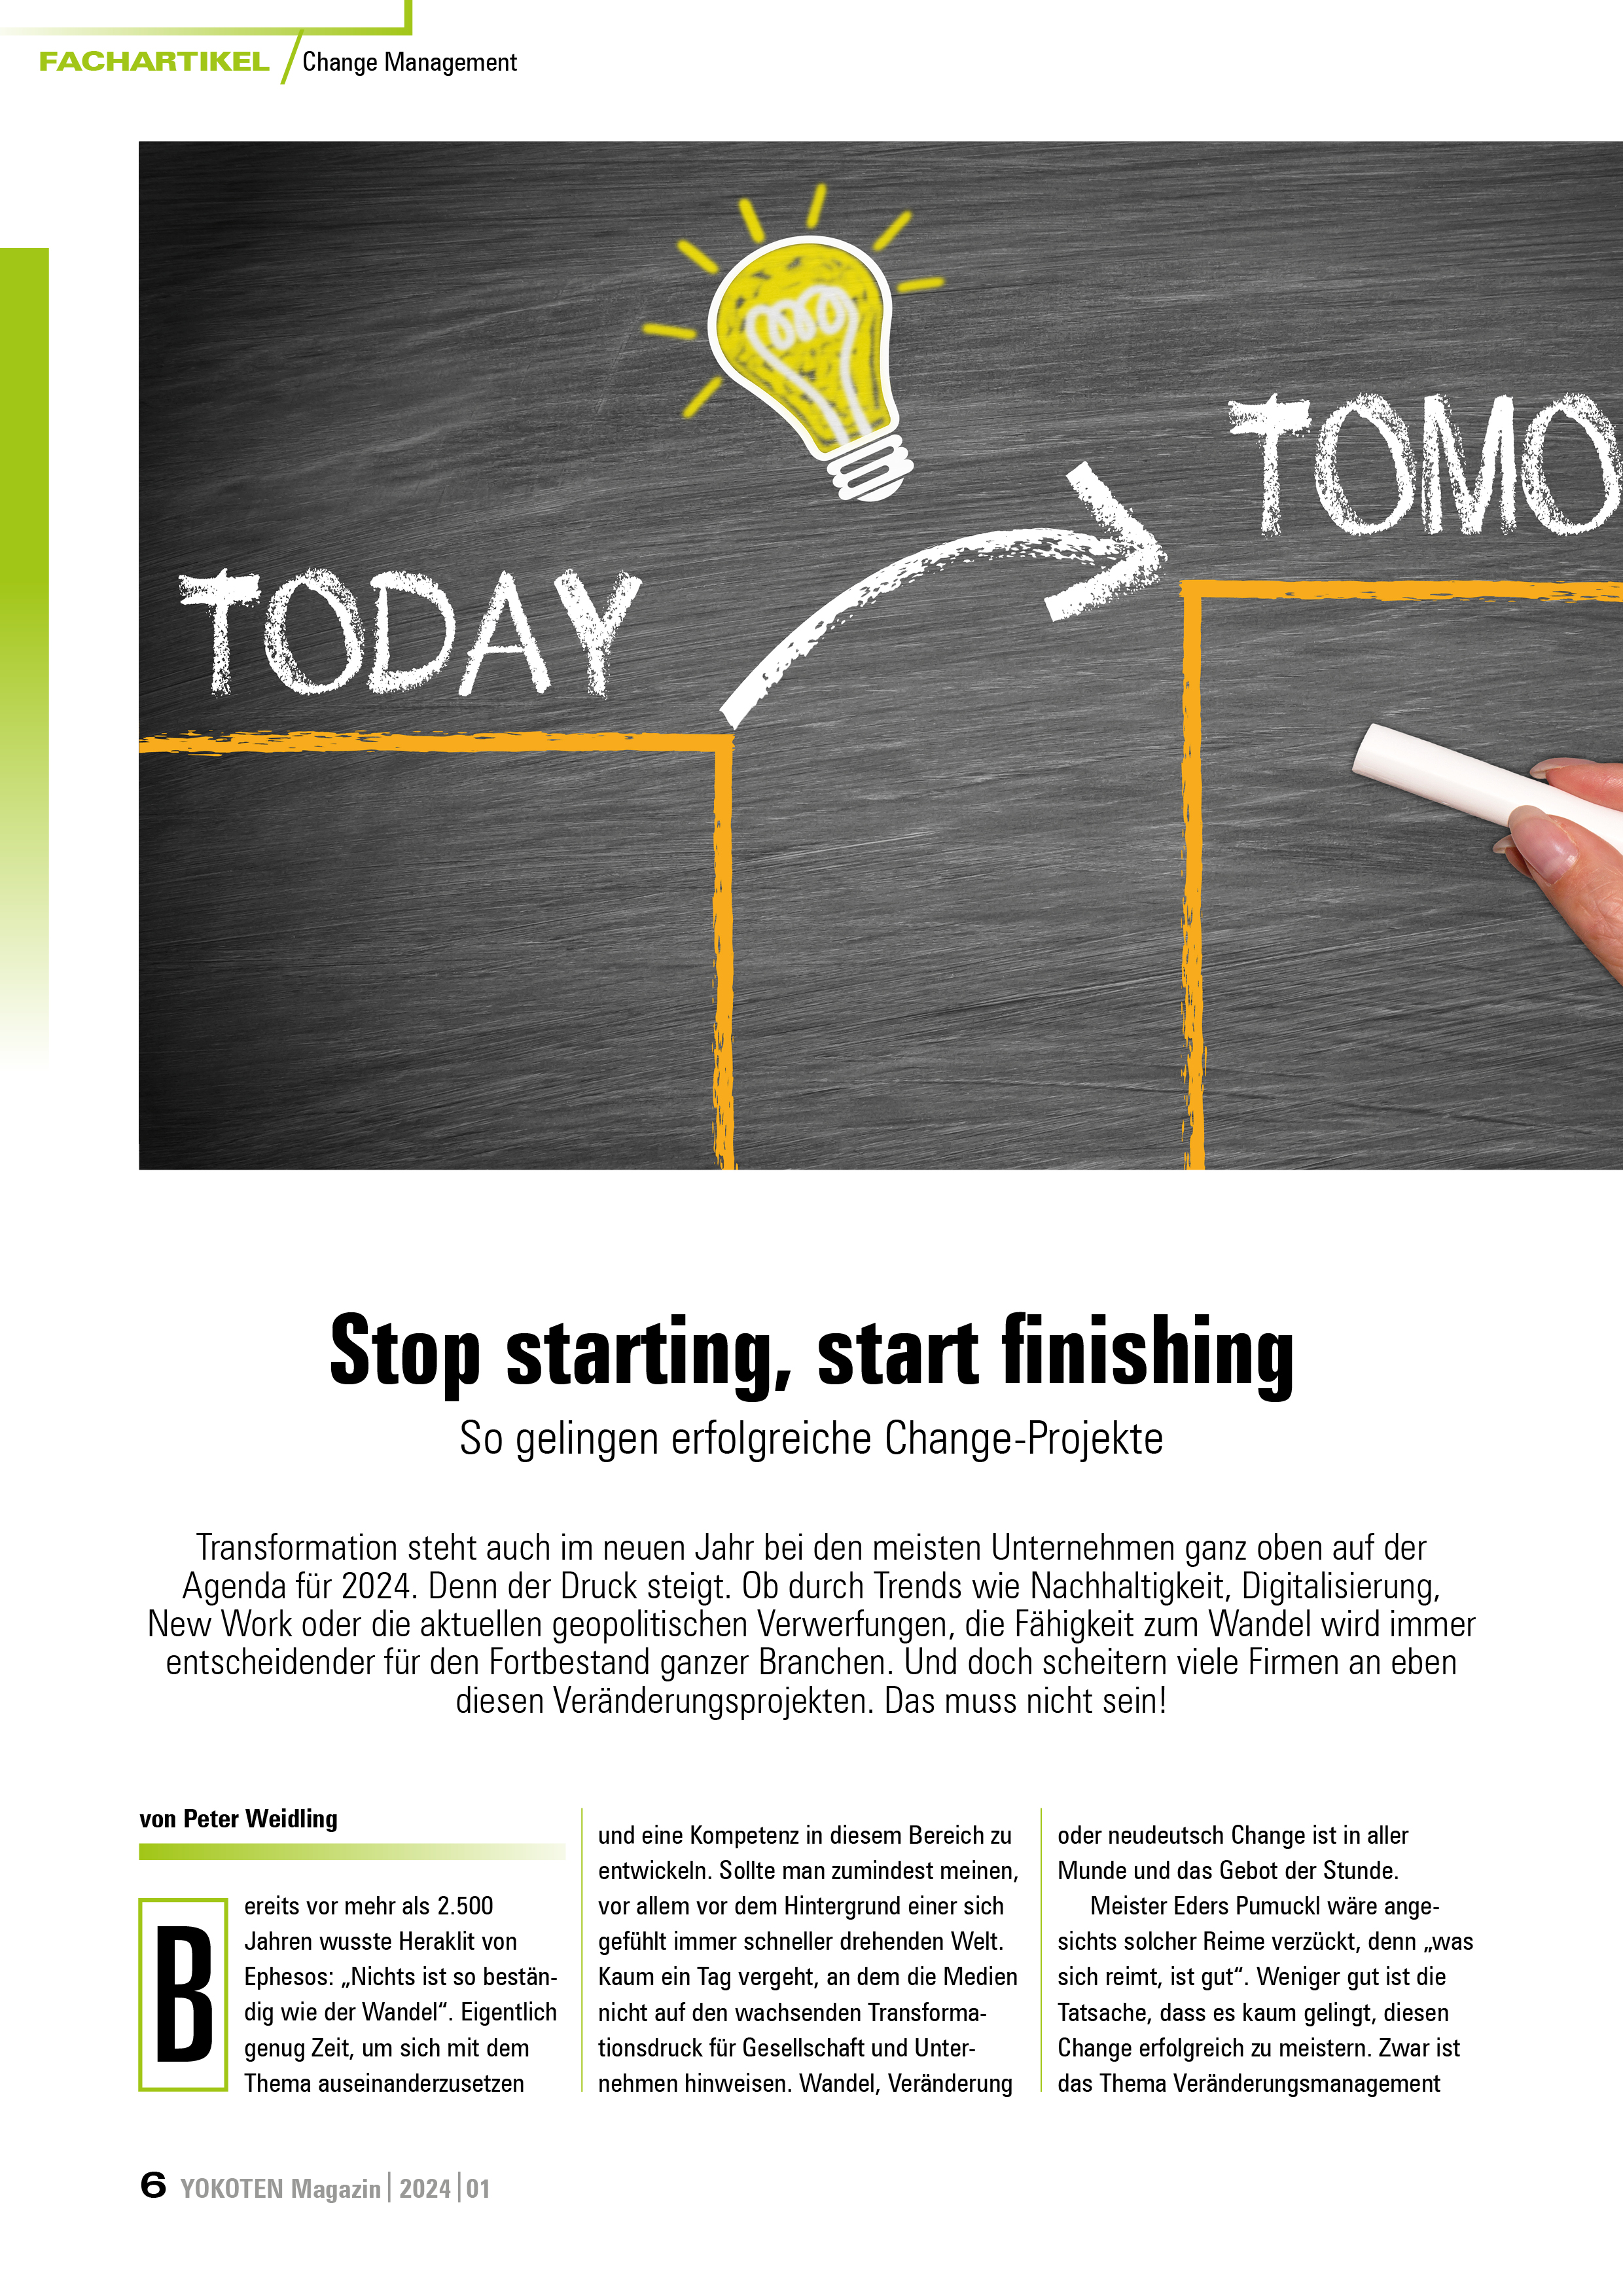 Stop starting, start finishing - Artikel aus Fachmagazin YOKOTEN 2024-01